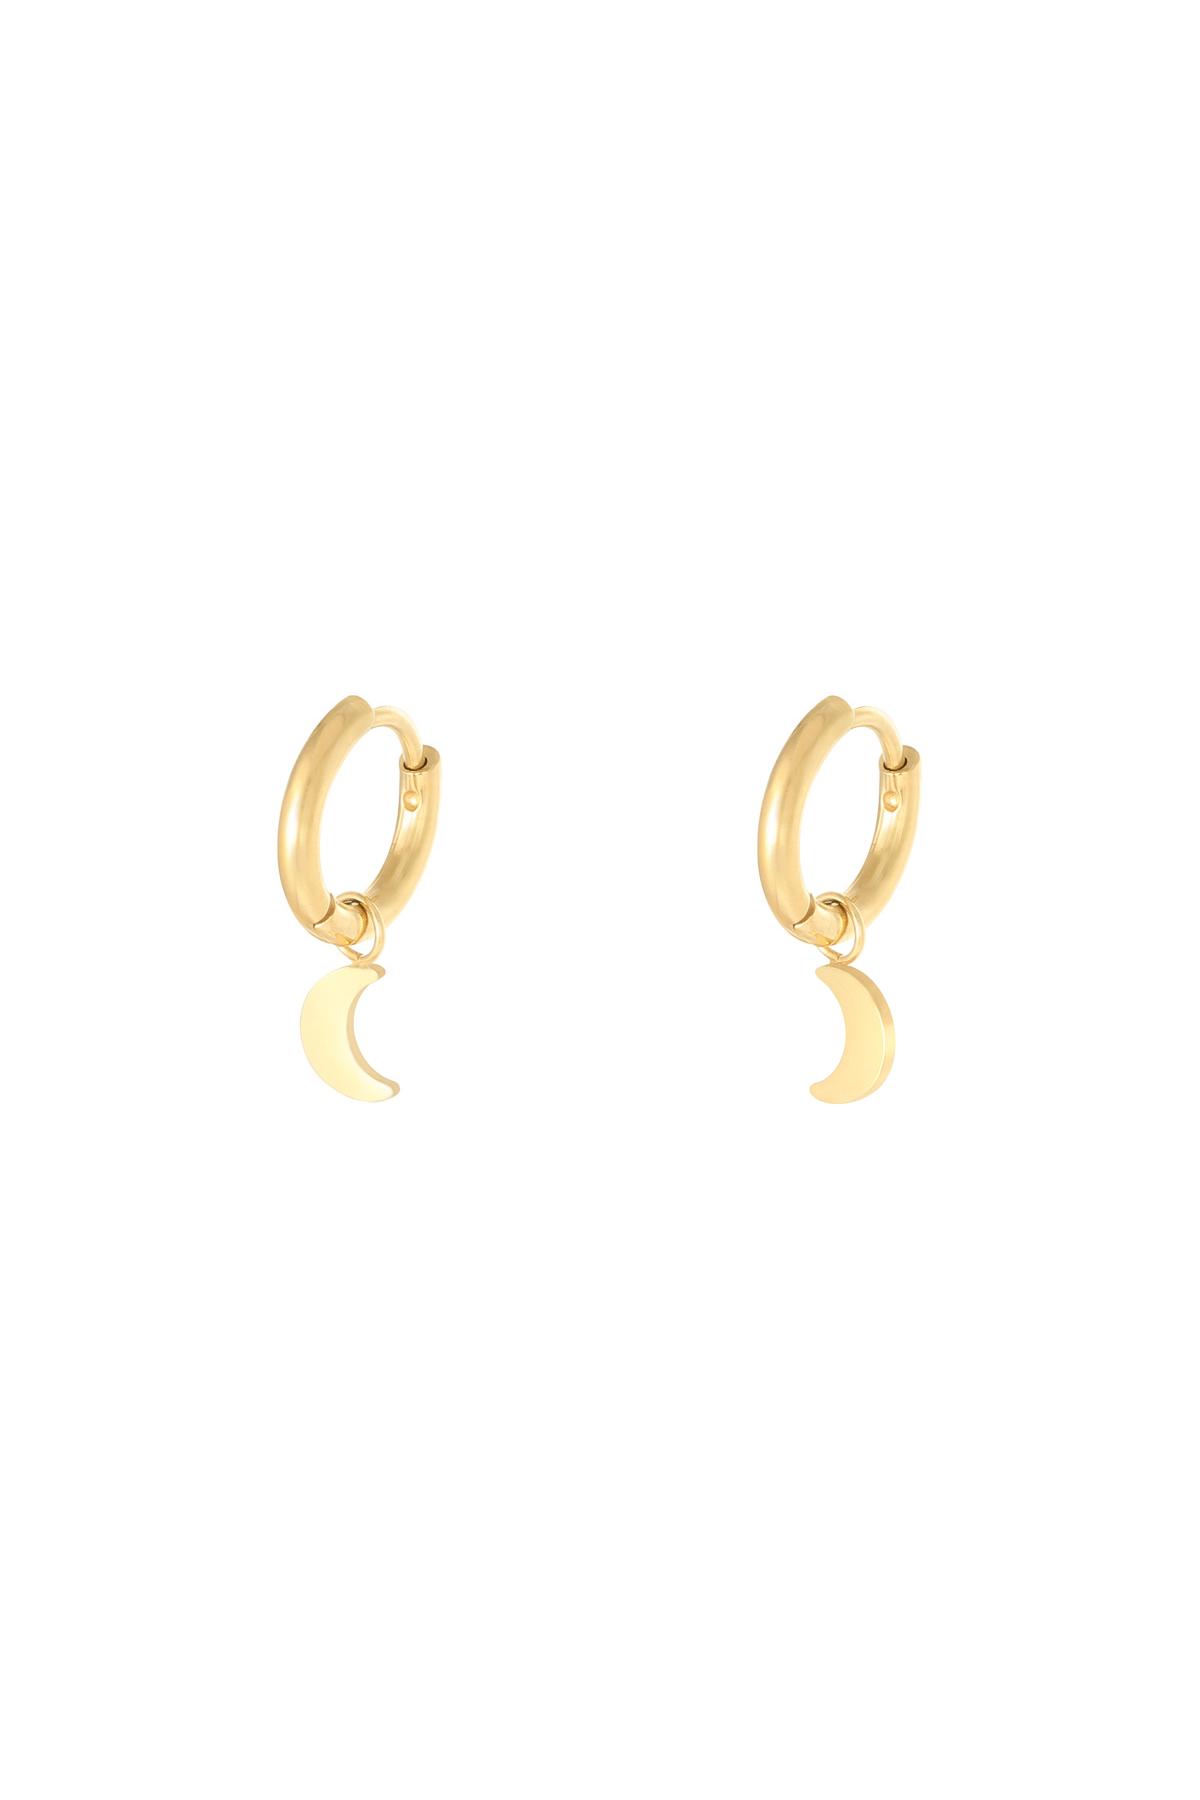 Earrings Moon Gold Stainless Steel h5 